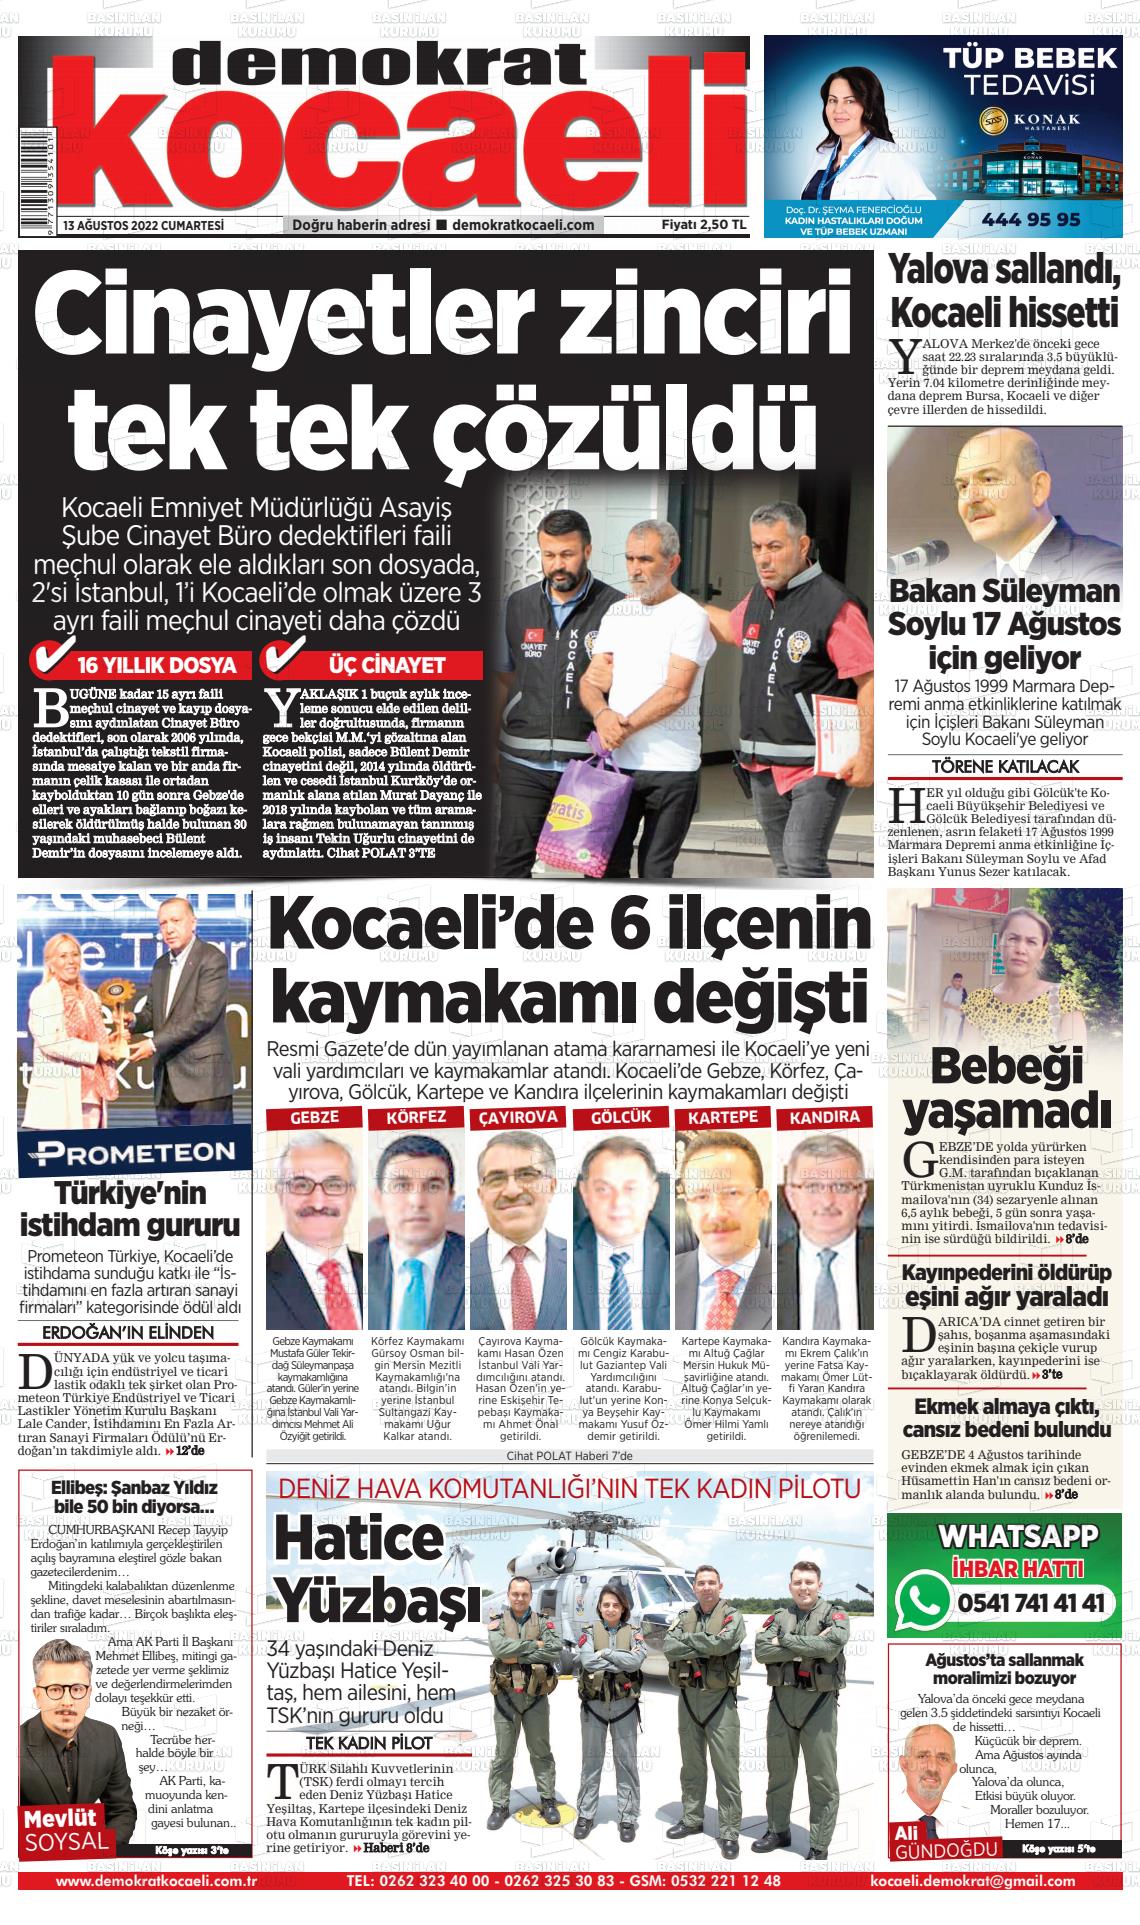 13 Ağustos 2022 Demokrat Kocaeli Gazete Manşeti